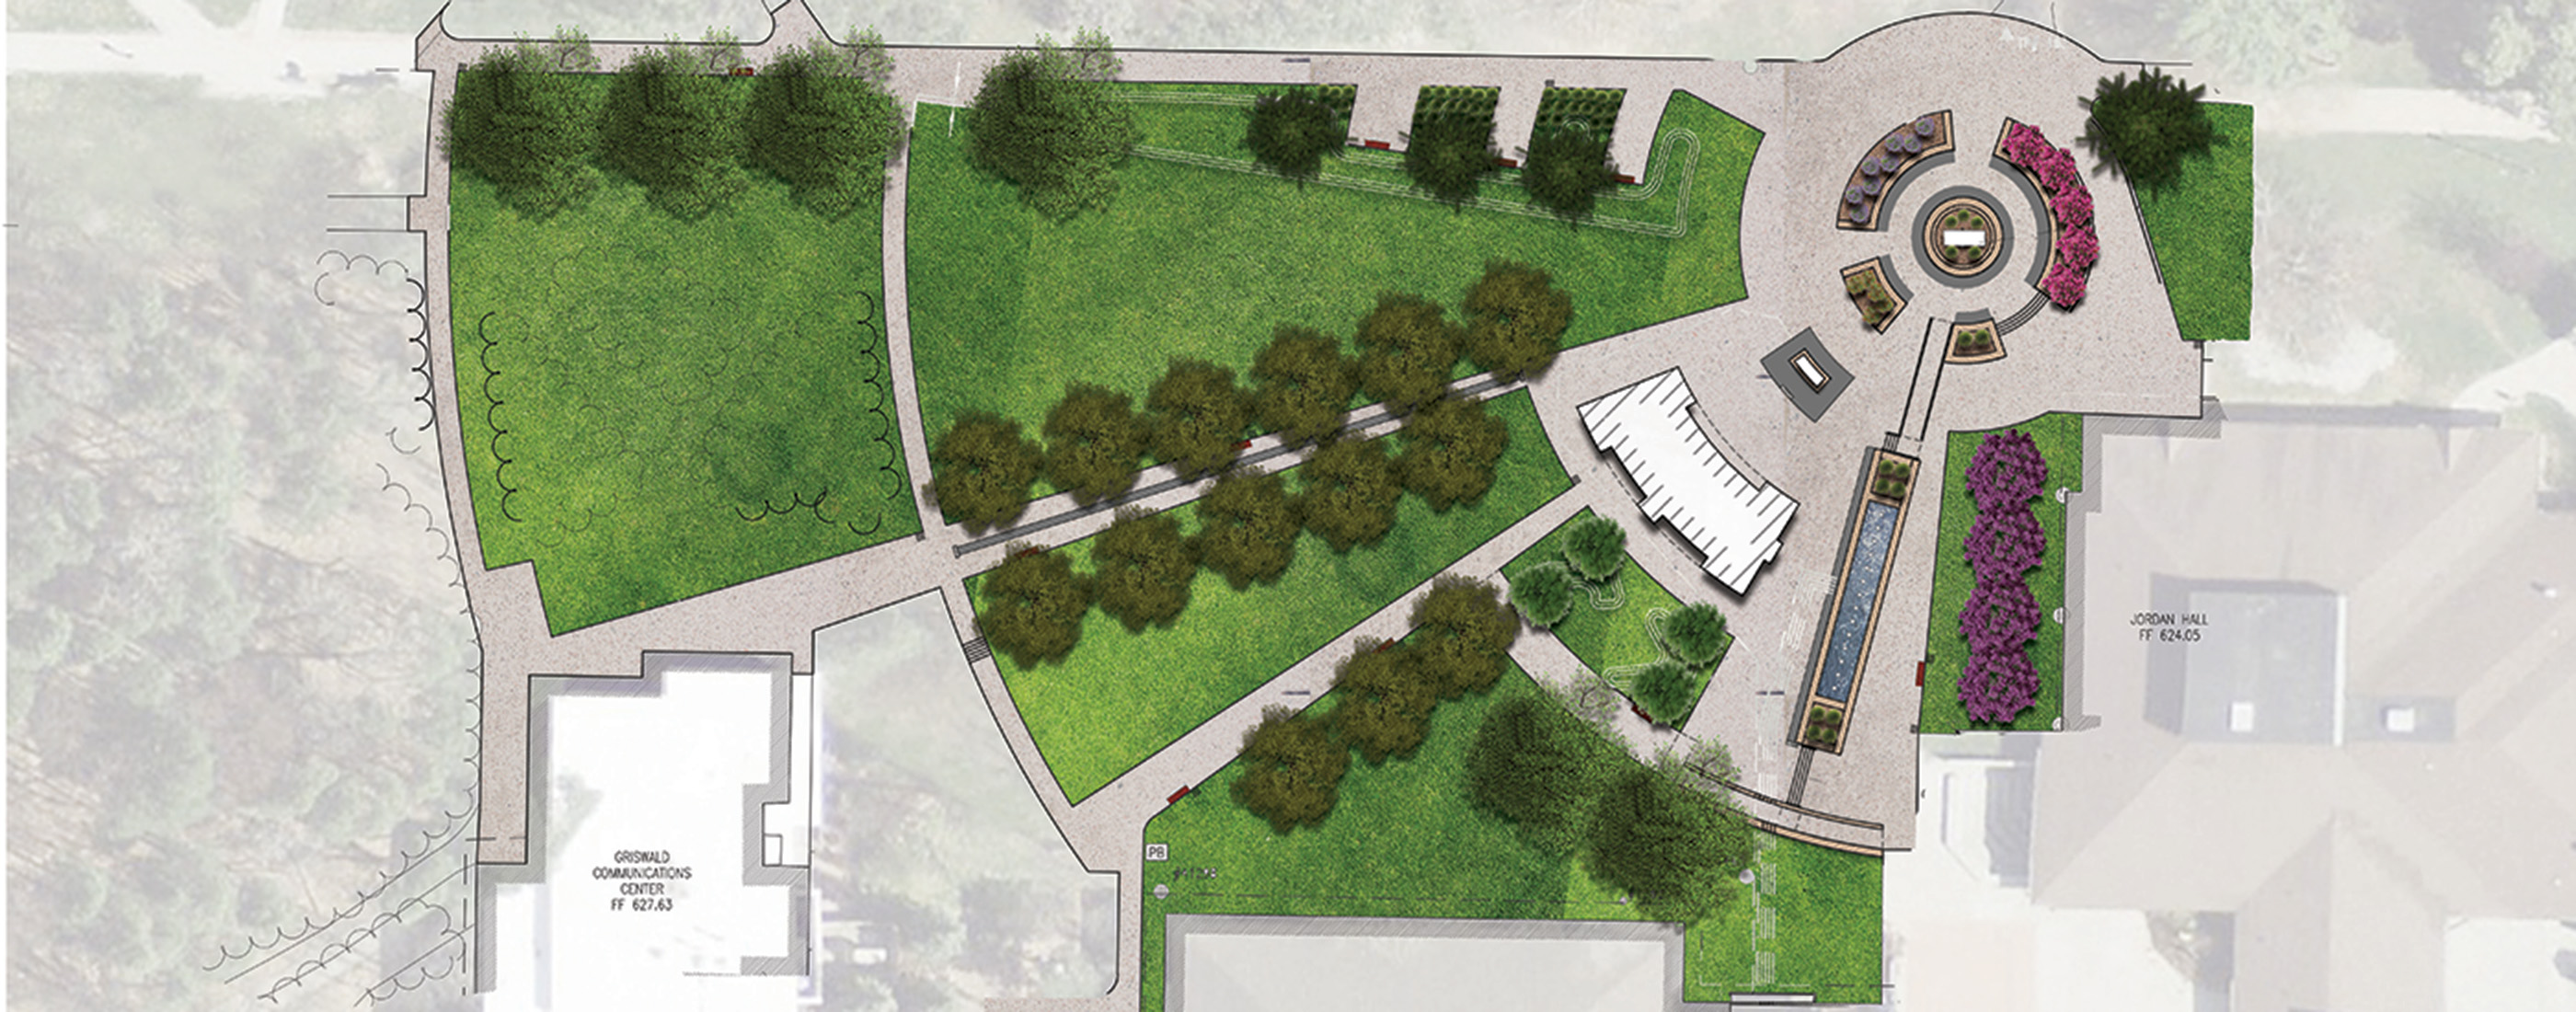 Northwood University base plan from Site Design